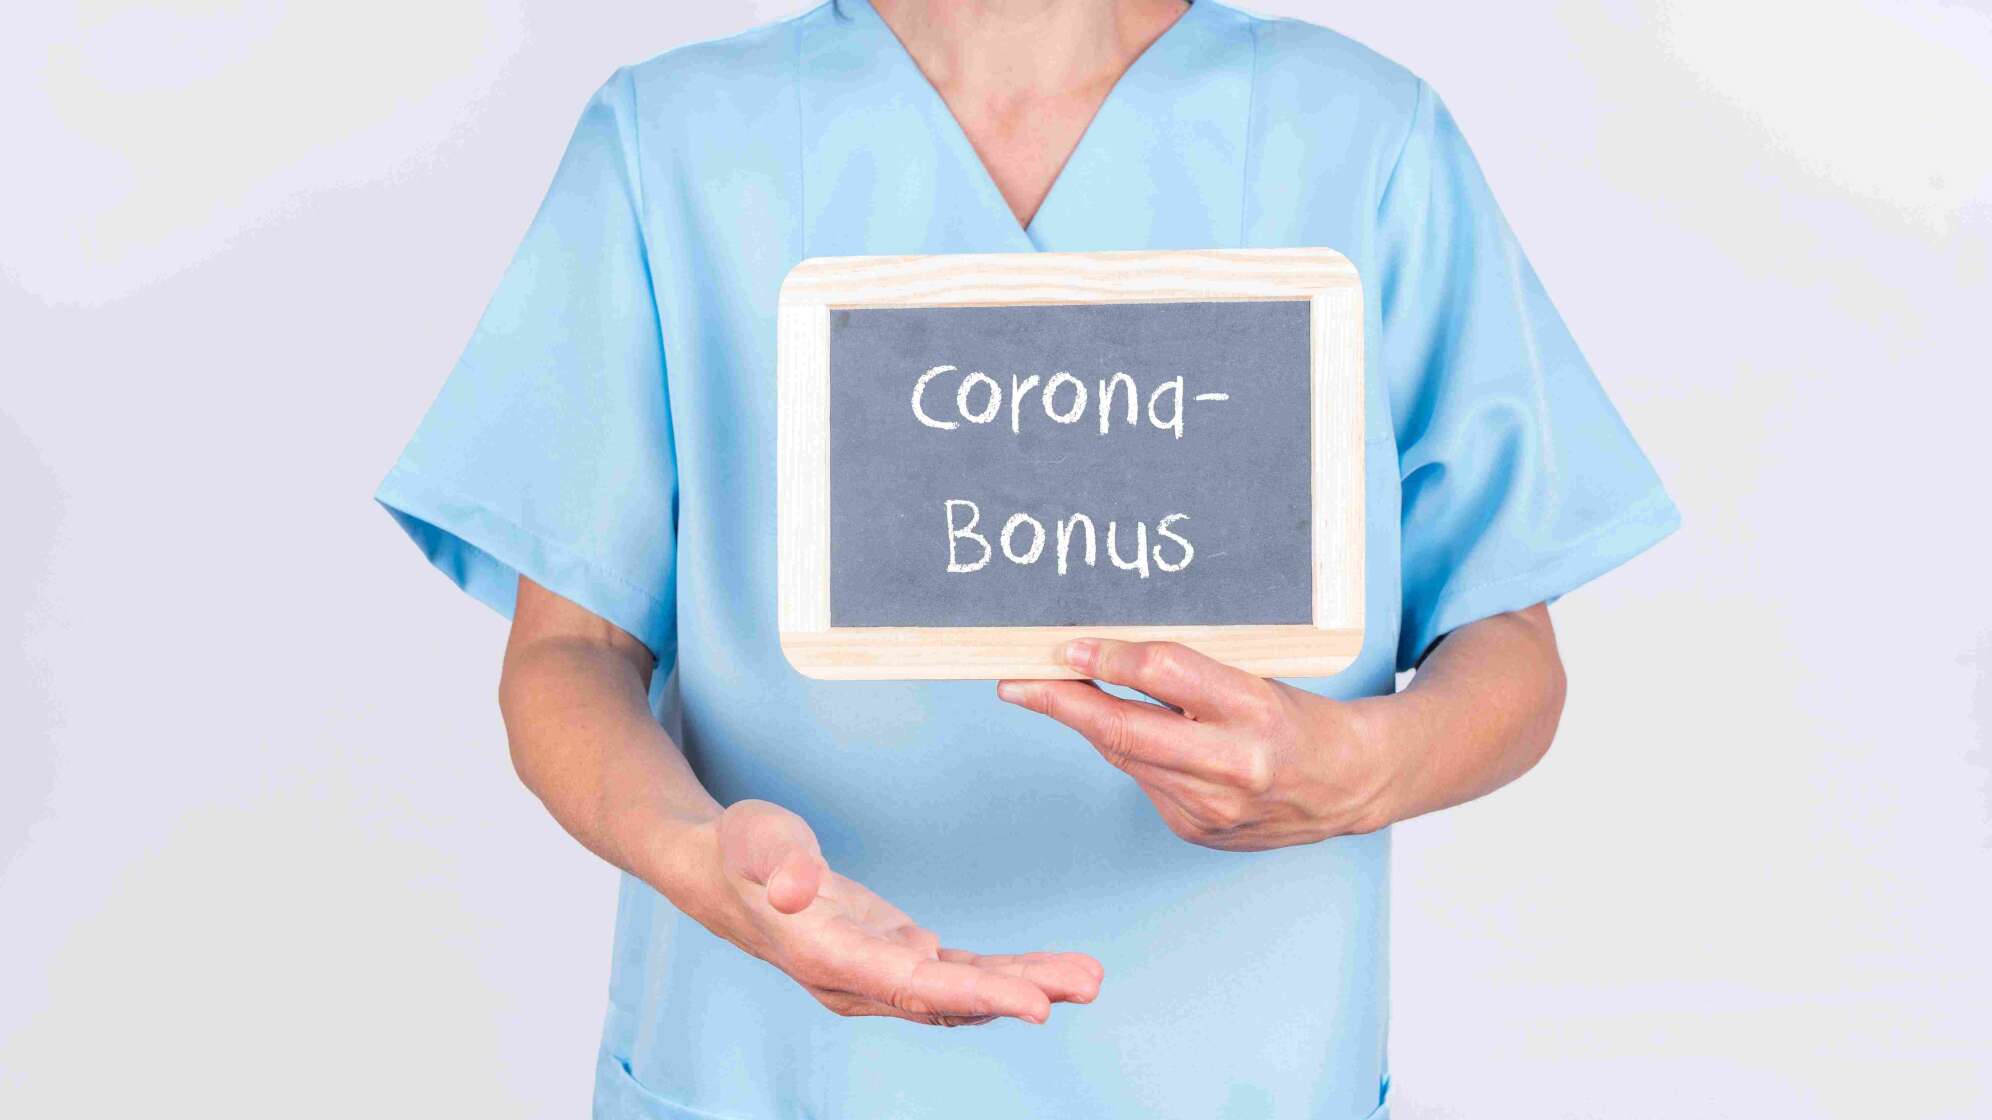 Corona Bonus Schild